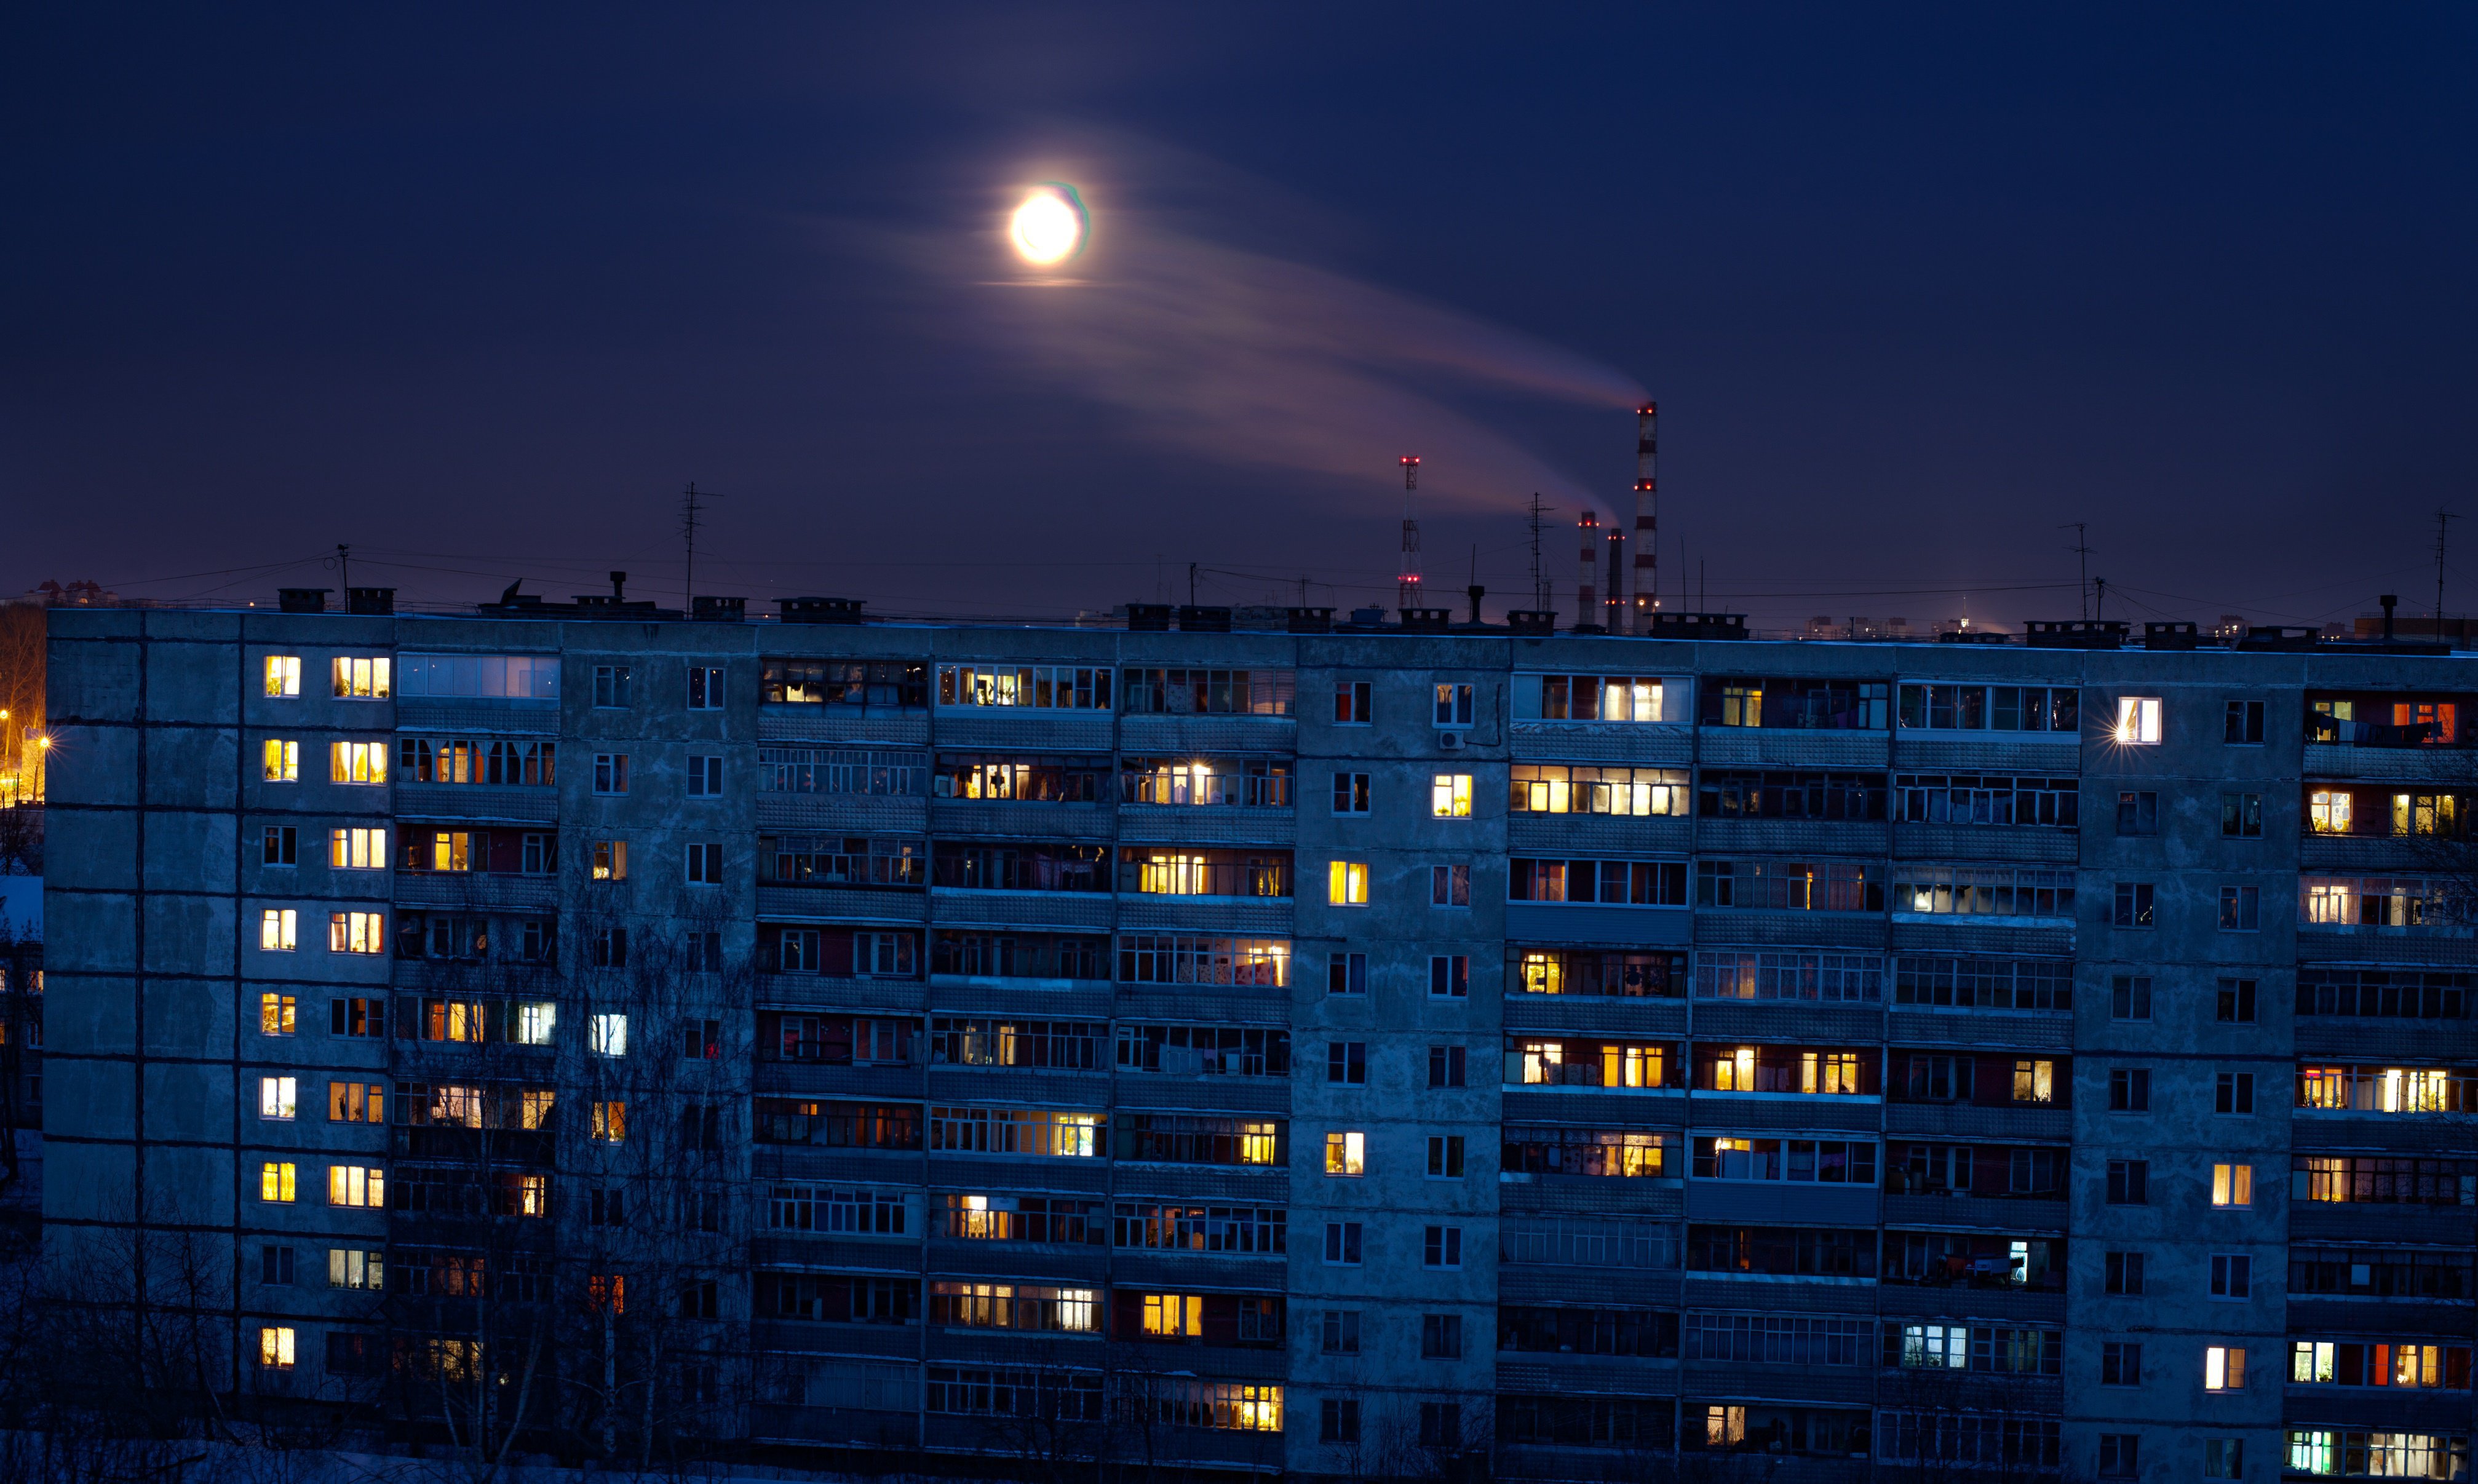 General 4029x2413 night sky building Russia block of flats apartments lights city lights moonlight Moon